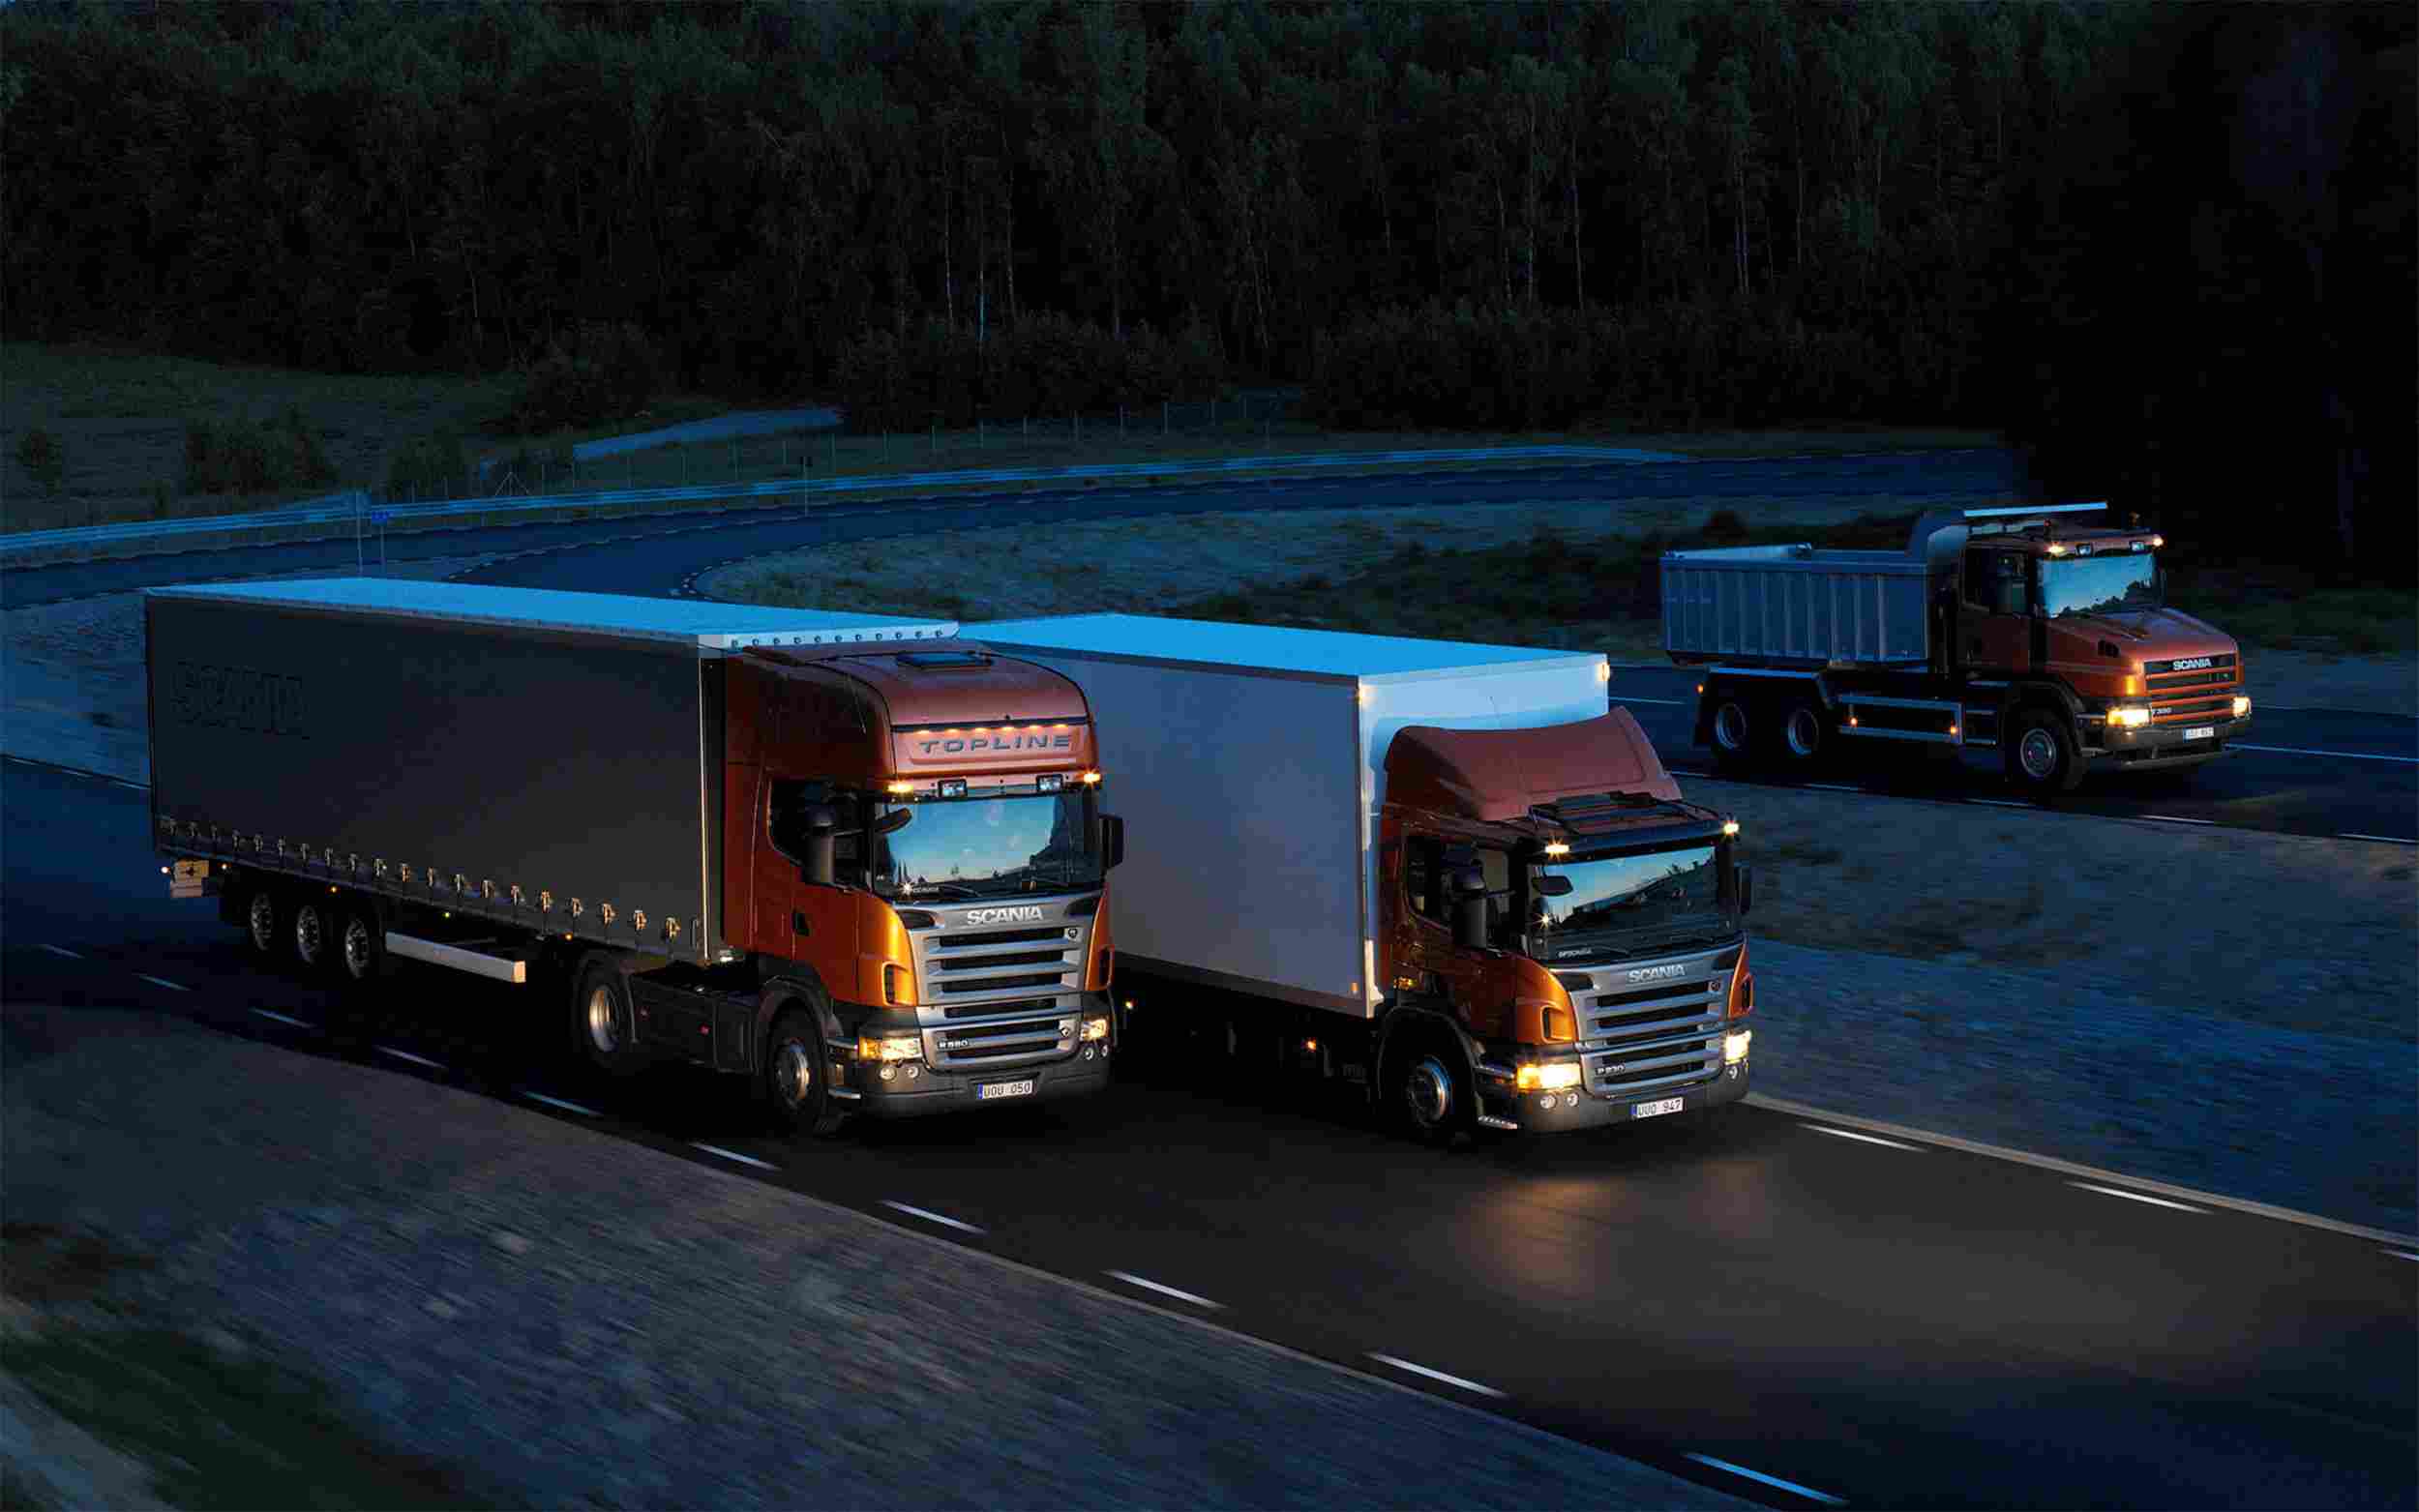 http://pallet24.co.uk/wp-content/uploads/2015/09/Three-orange-Scania-trucks.jpg